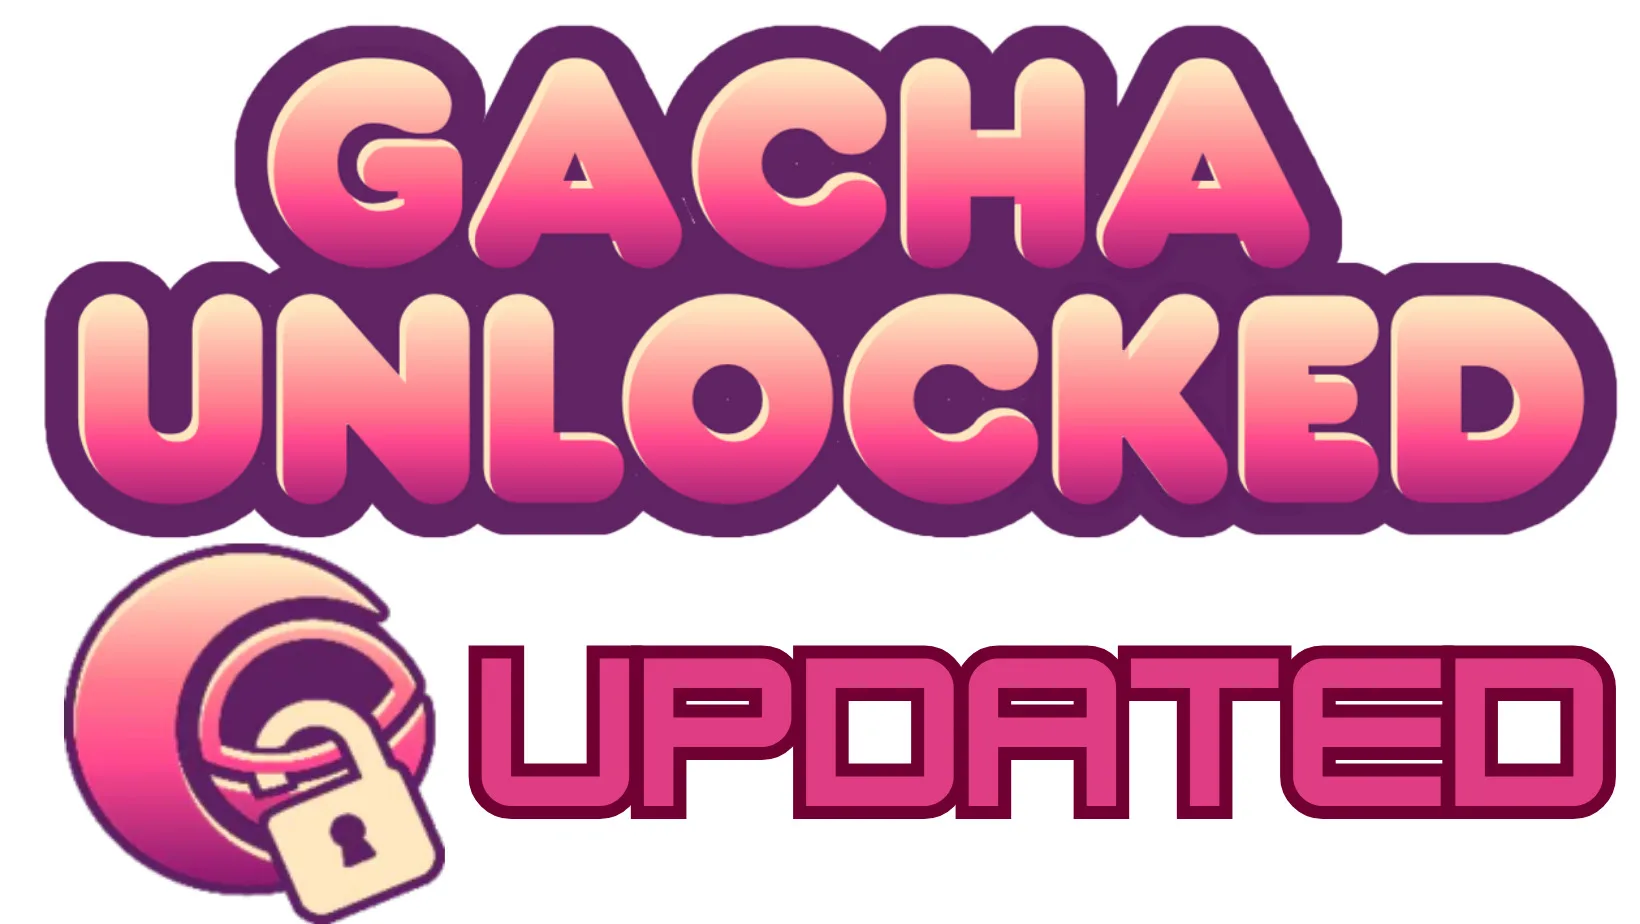 ꒰🌆꒱ [ • How To Download Gacha Unlocked Mod • ] • Happy Gacha 🍒 •} 